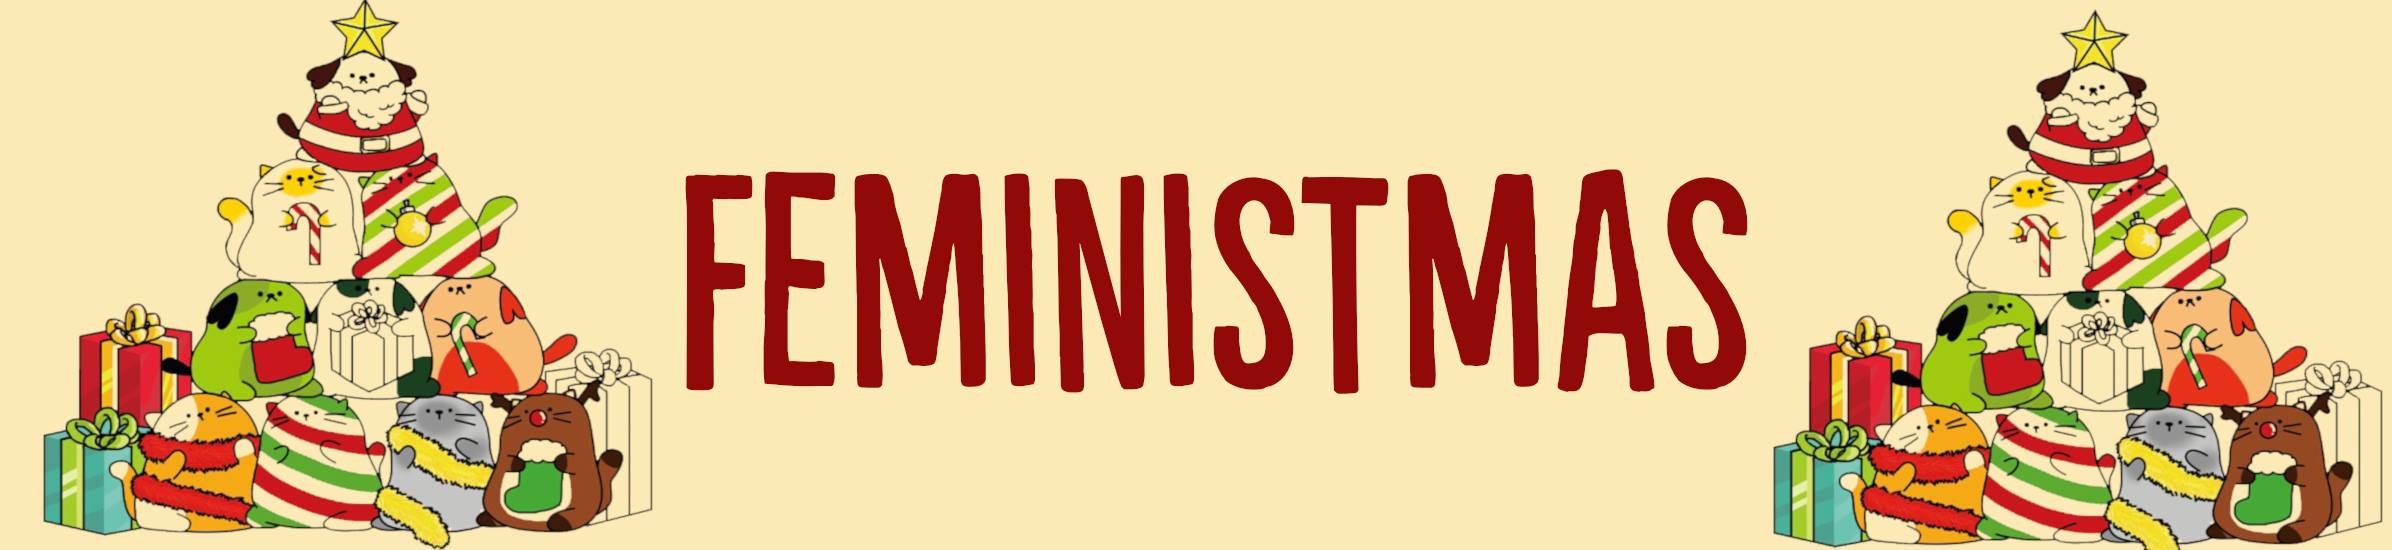 QueerEvents.ca - London event listing - feministmas 2018 banner